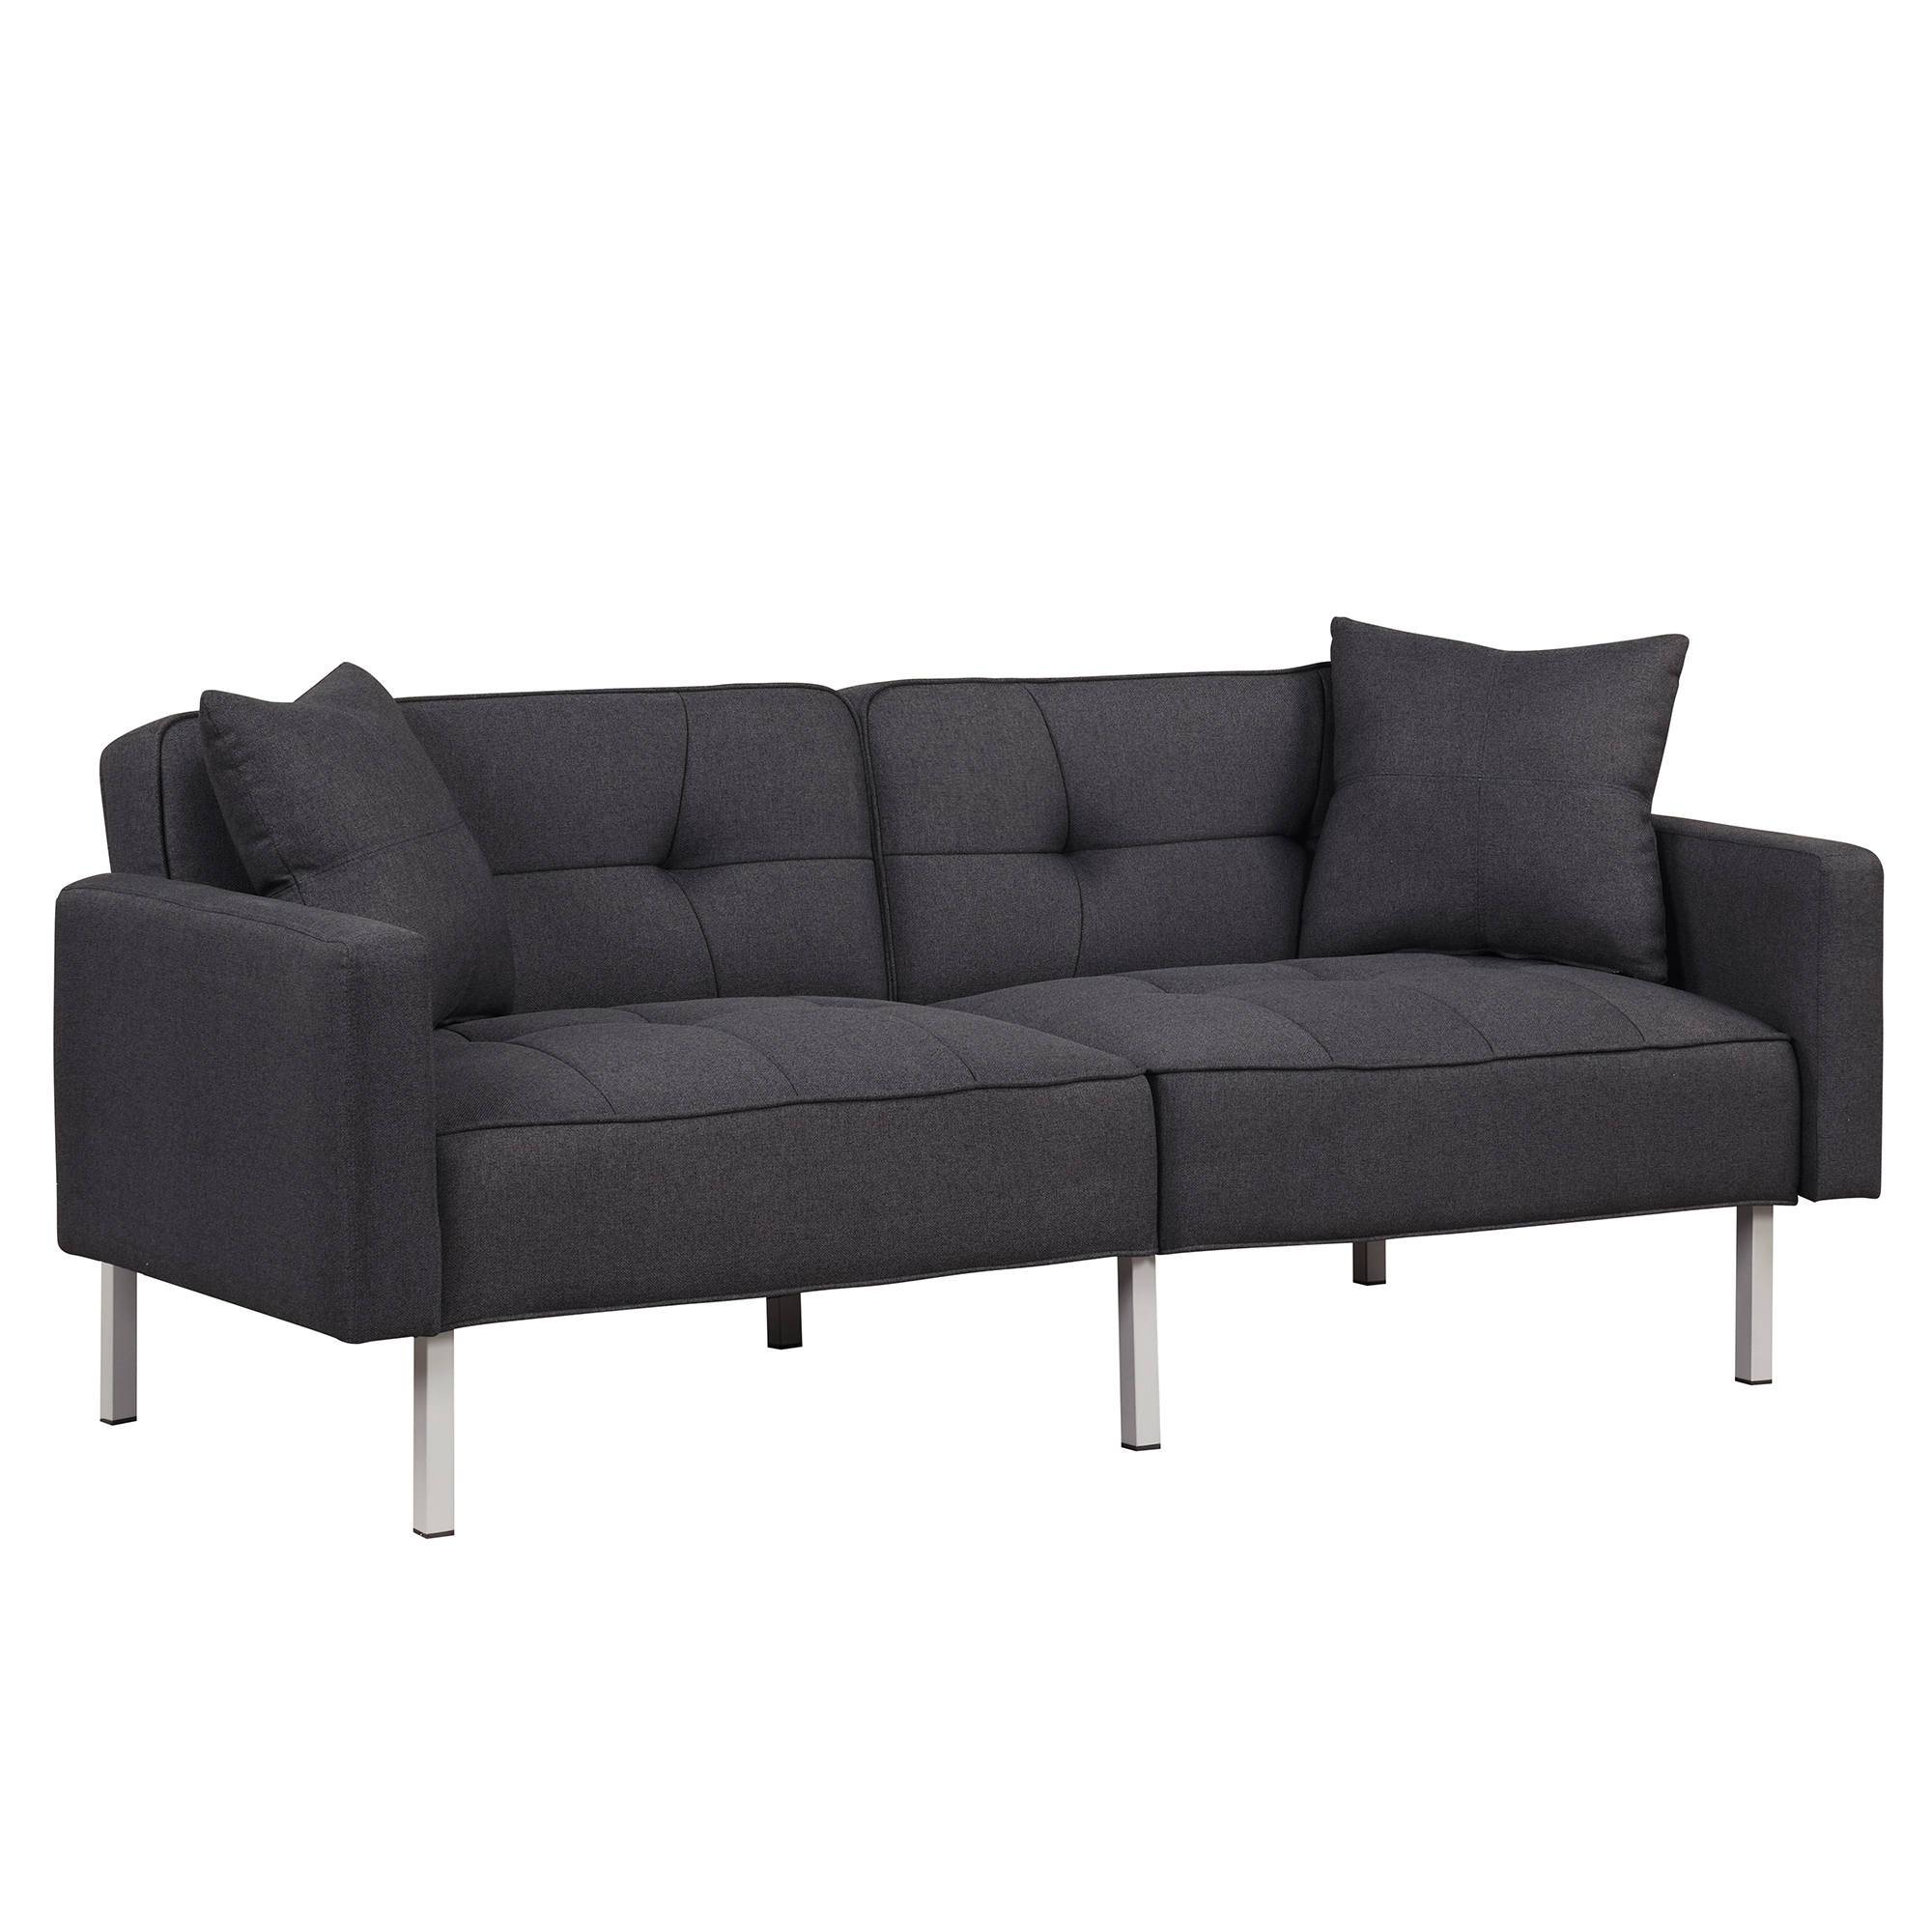 Modern Convertible Folding Futon Sofa Bed - SG000375AAB